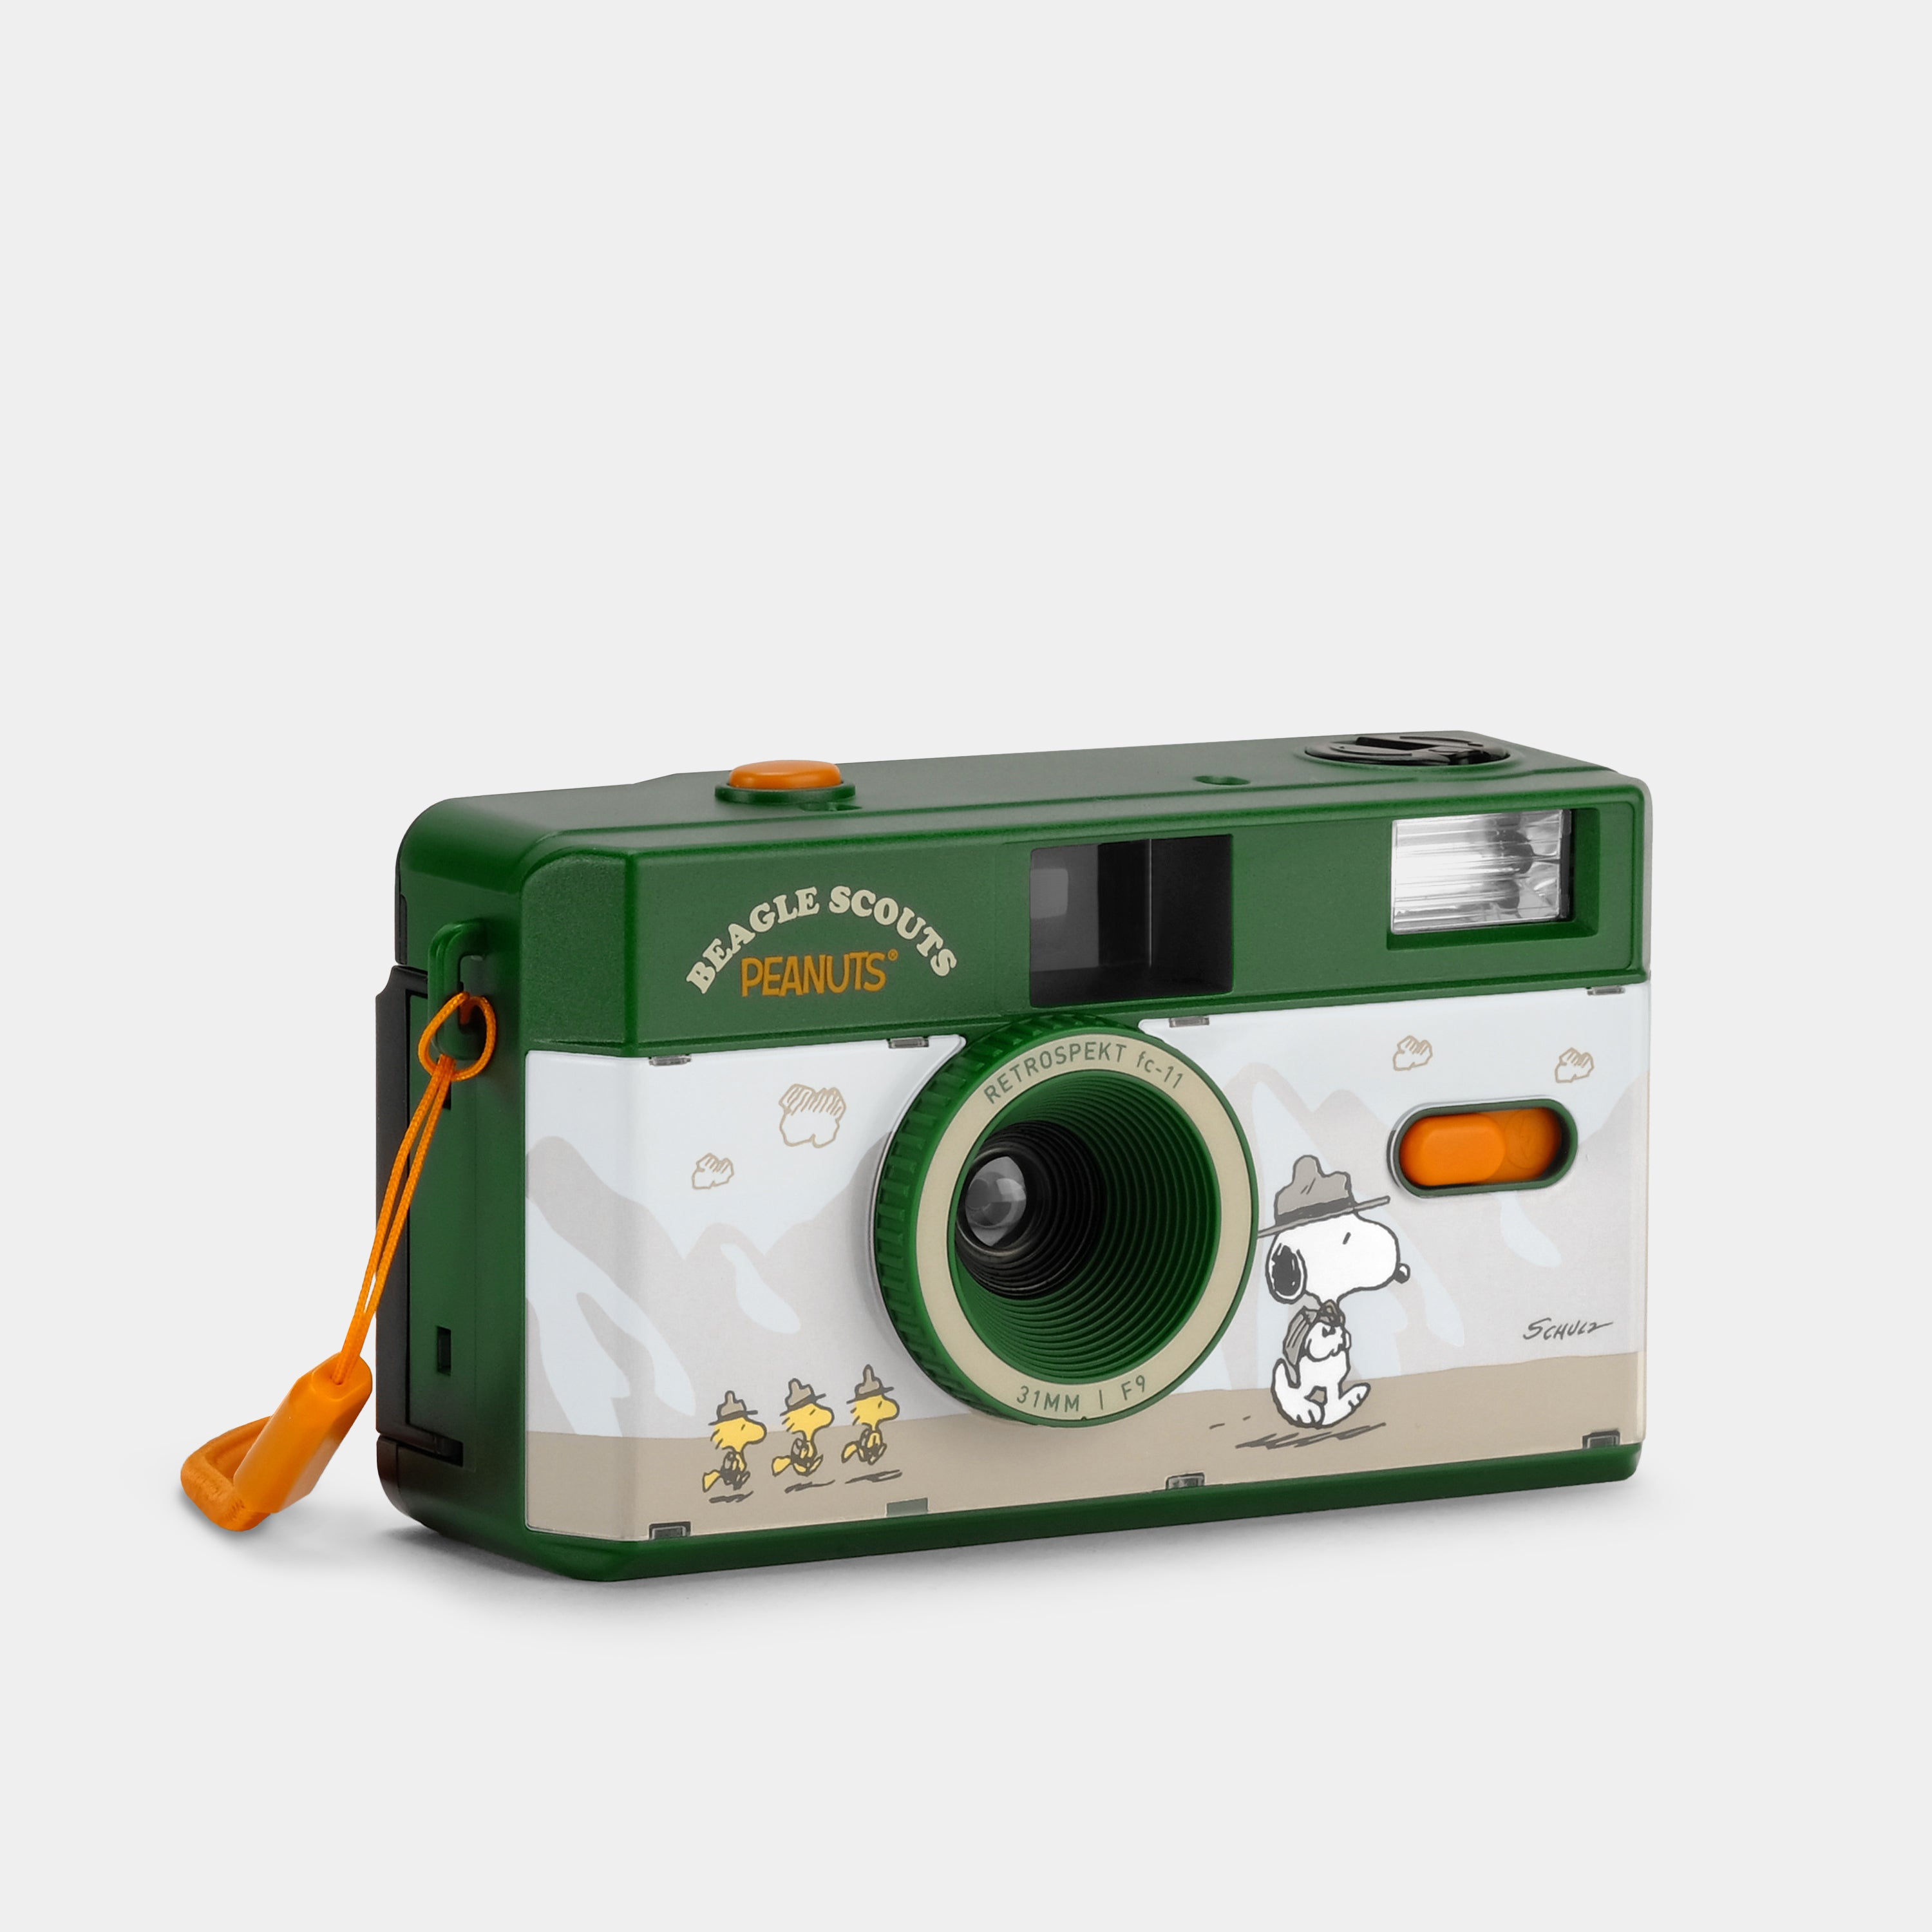 Peanuts Beagle Scouts Retrospekt FC-11 35mm Film Camera